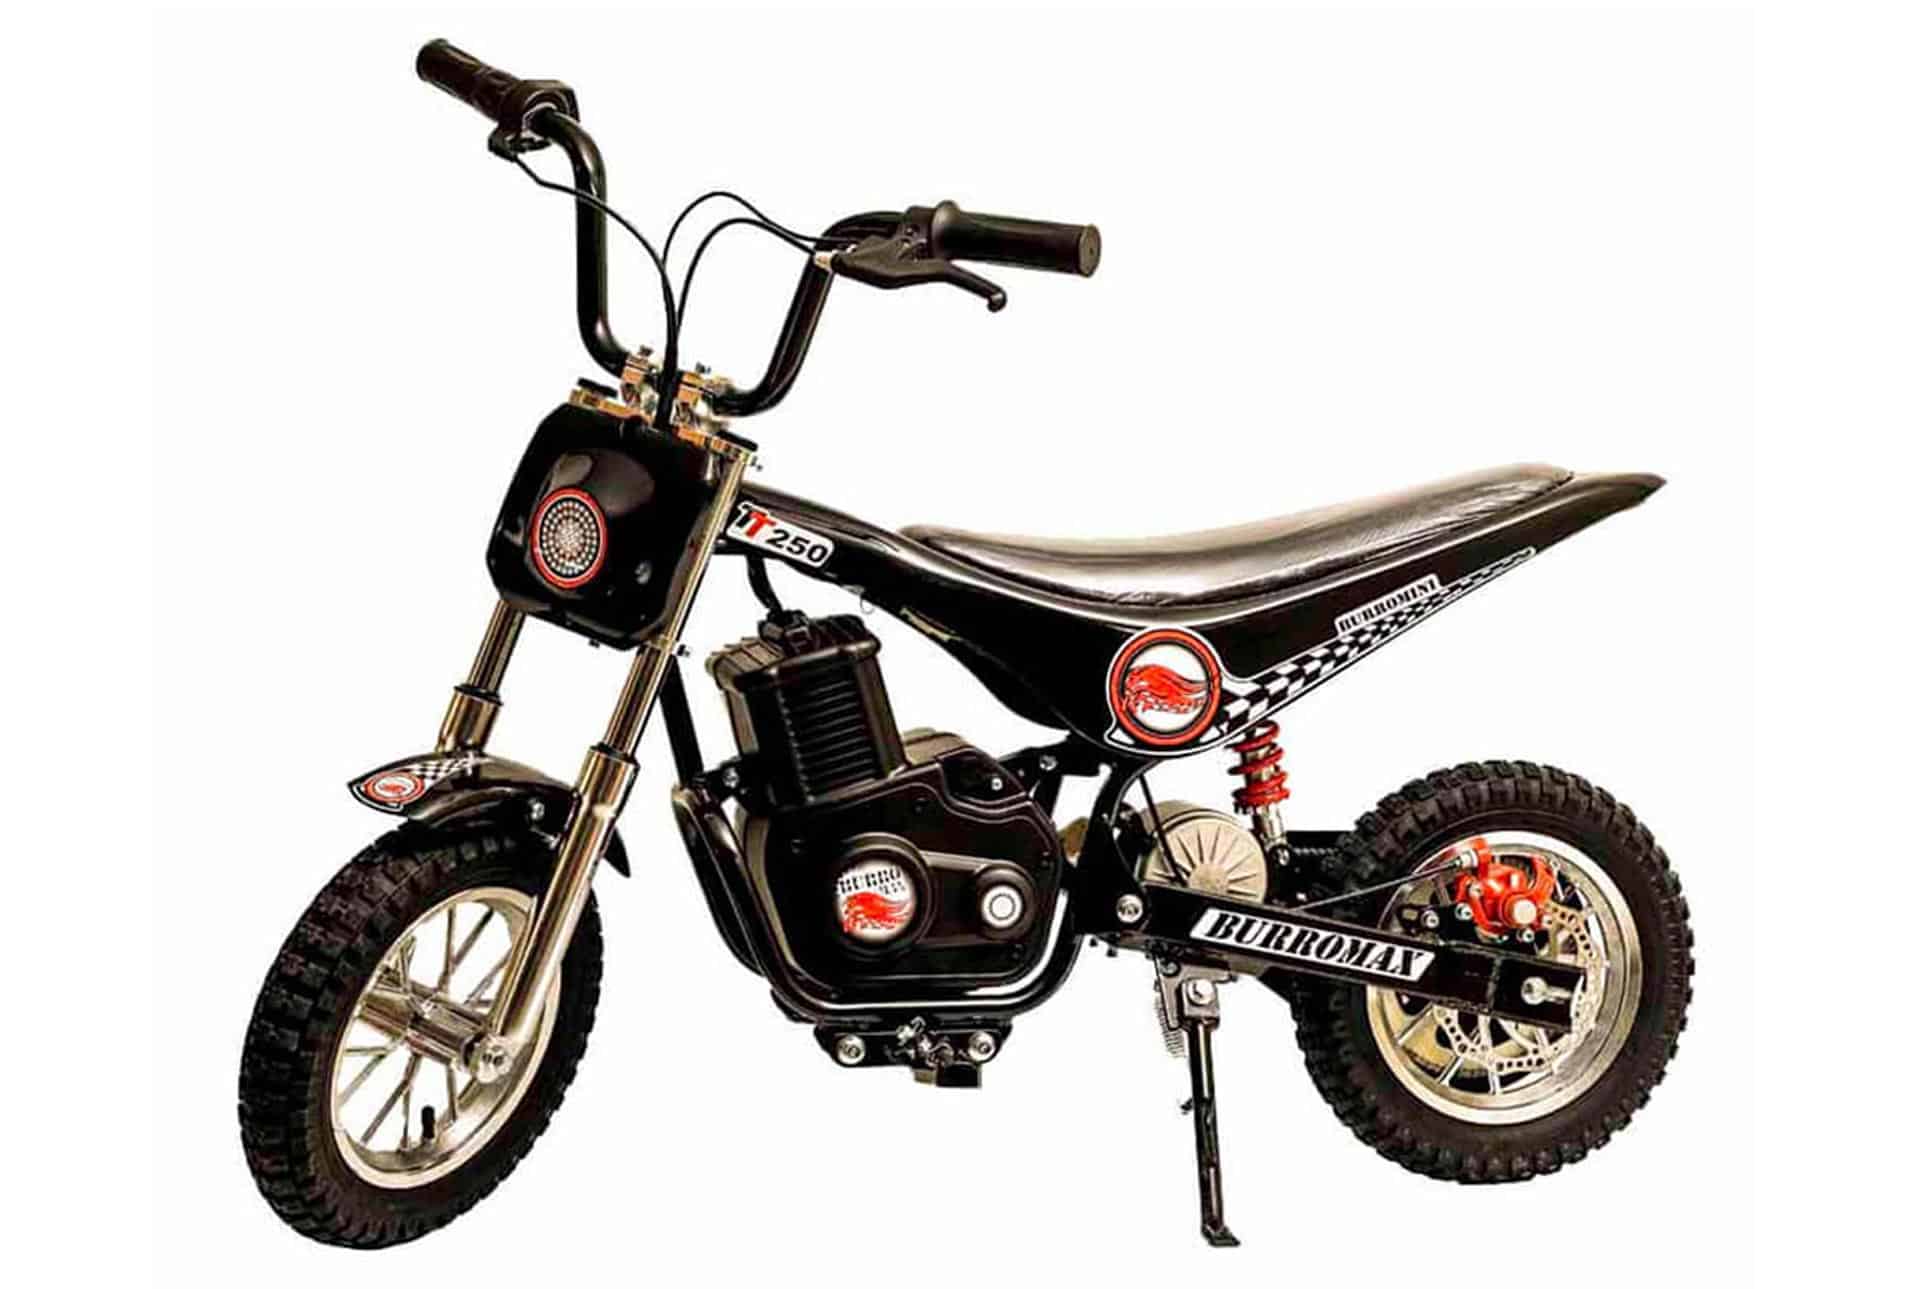 mini moped